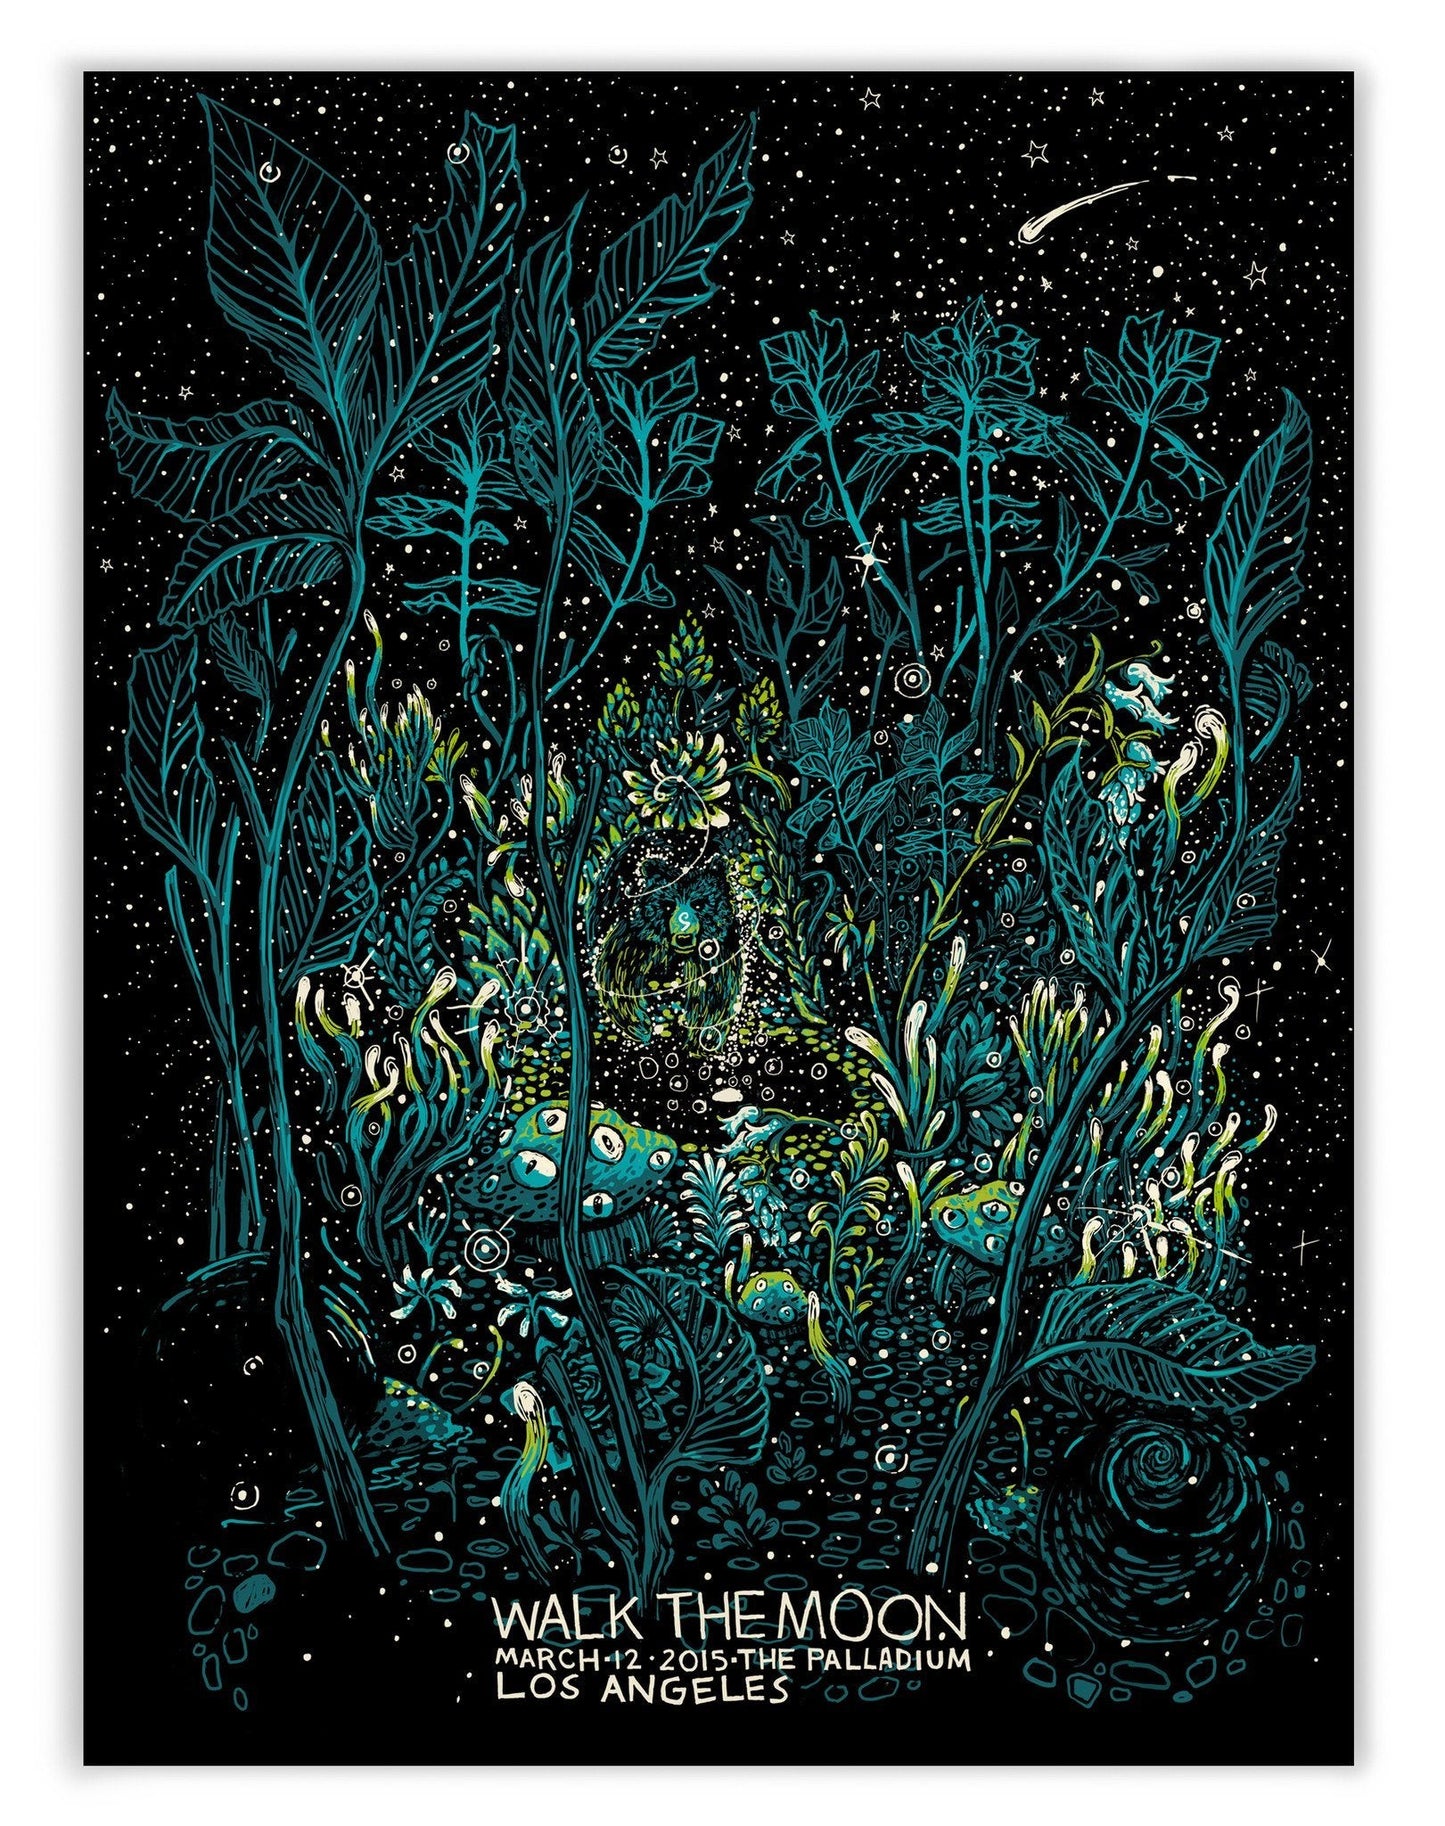 Walk the Moon Los Angeles (AP Edition of 50) Print James R. Eads